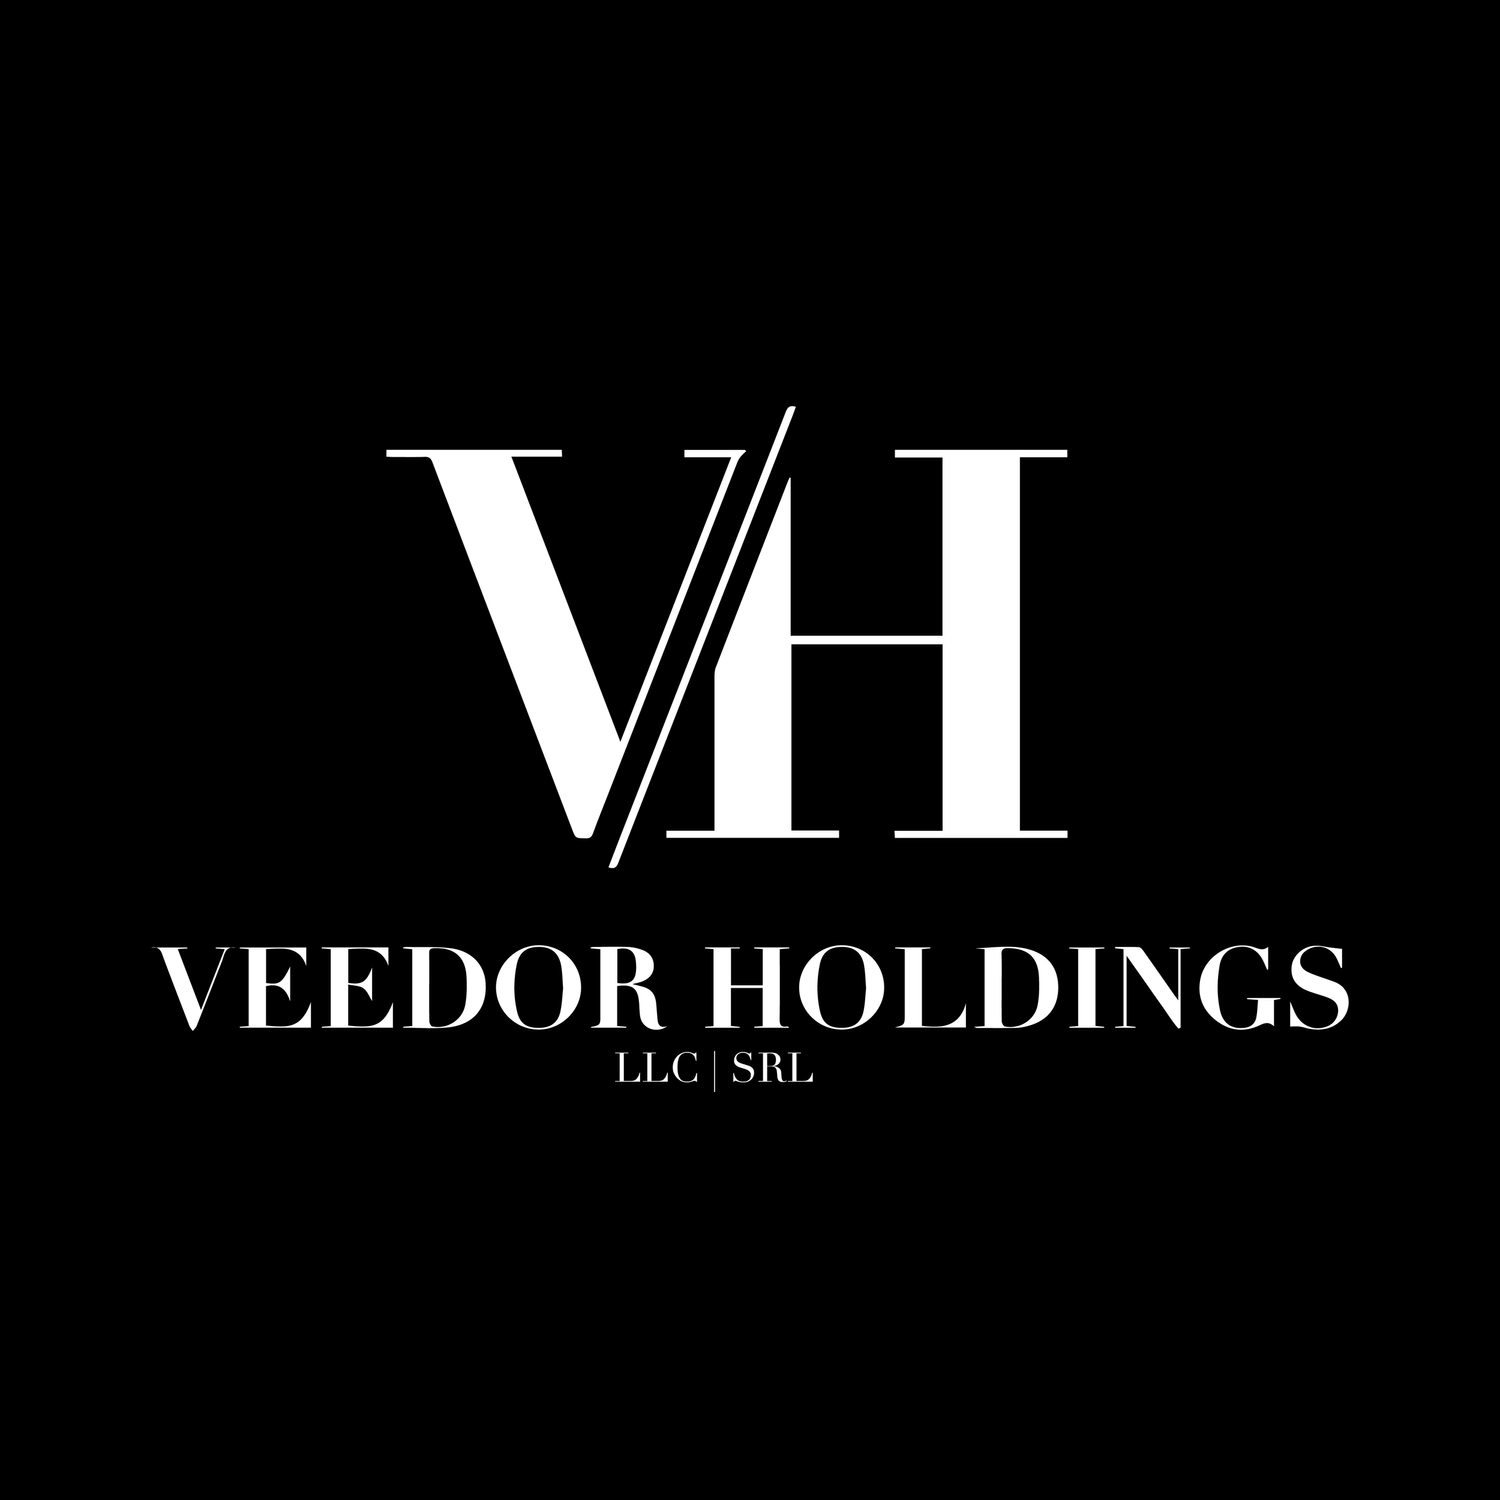 Veedor Holdings LLC|Srl